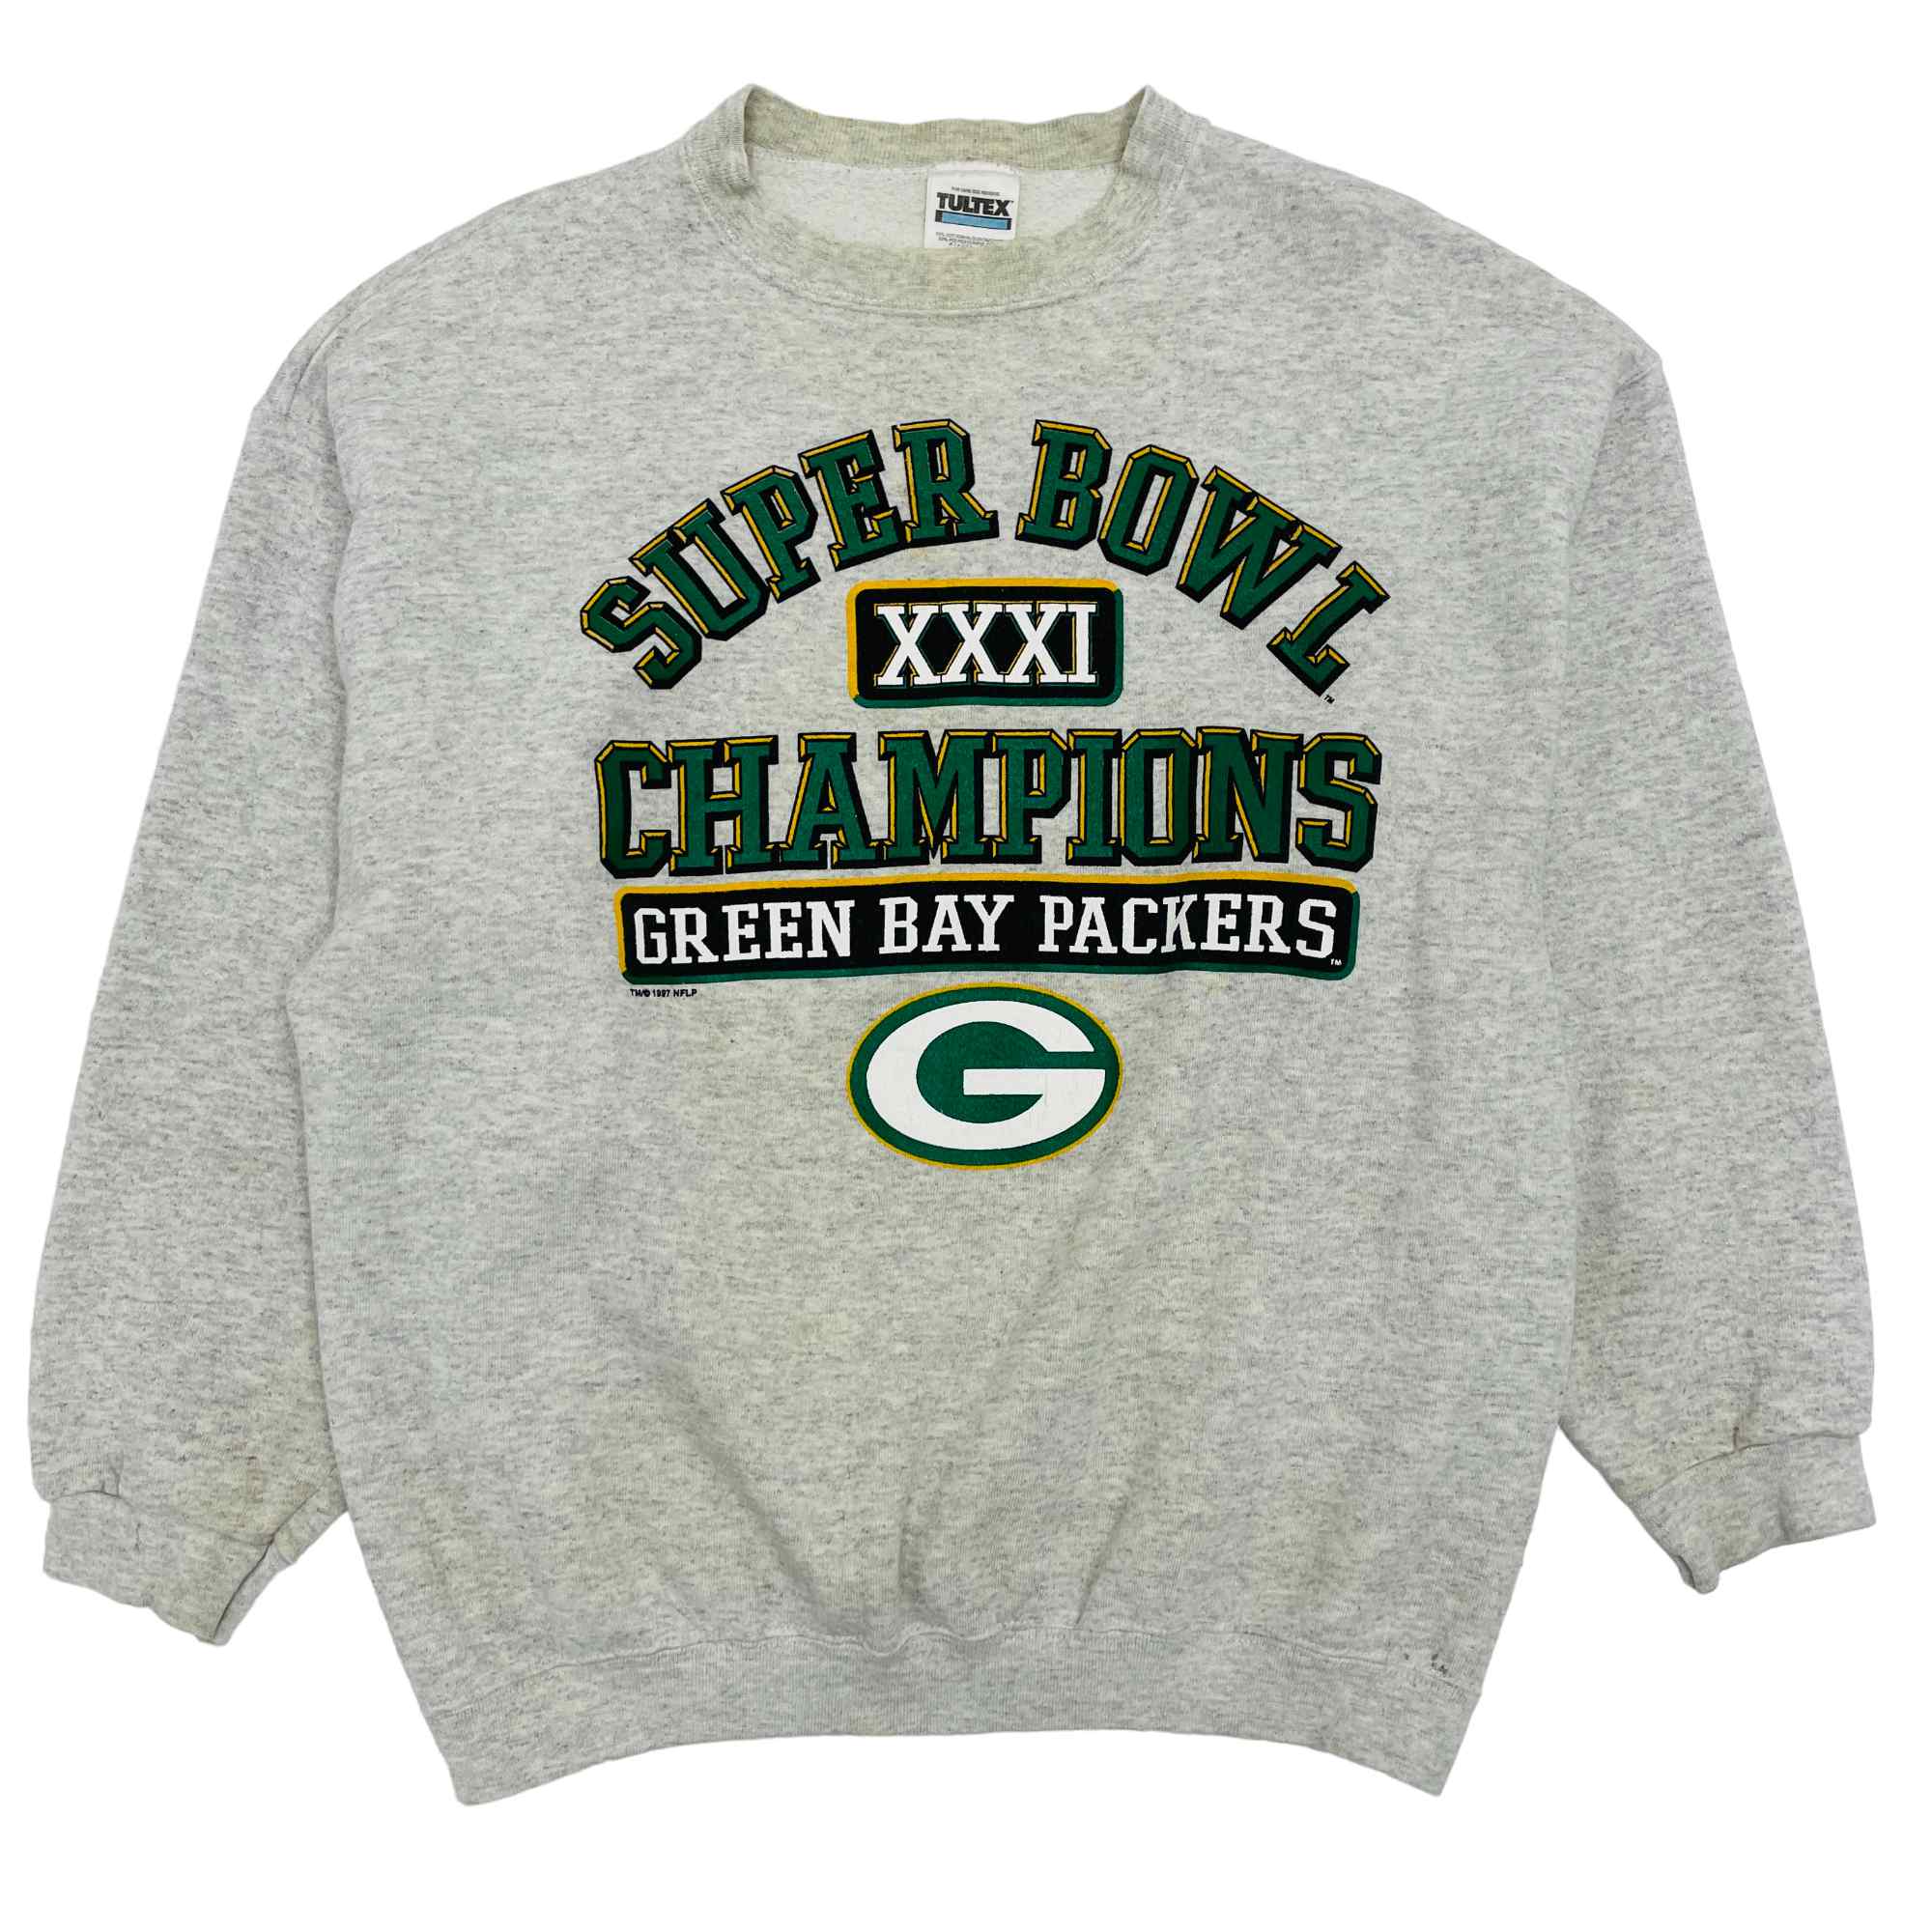 Green Bay Packers Superbowl Champions Sweatshirt - XL